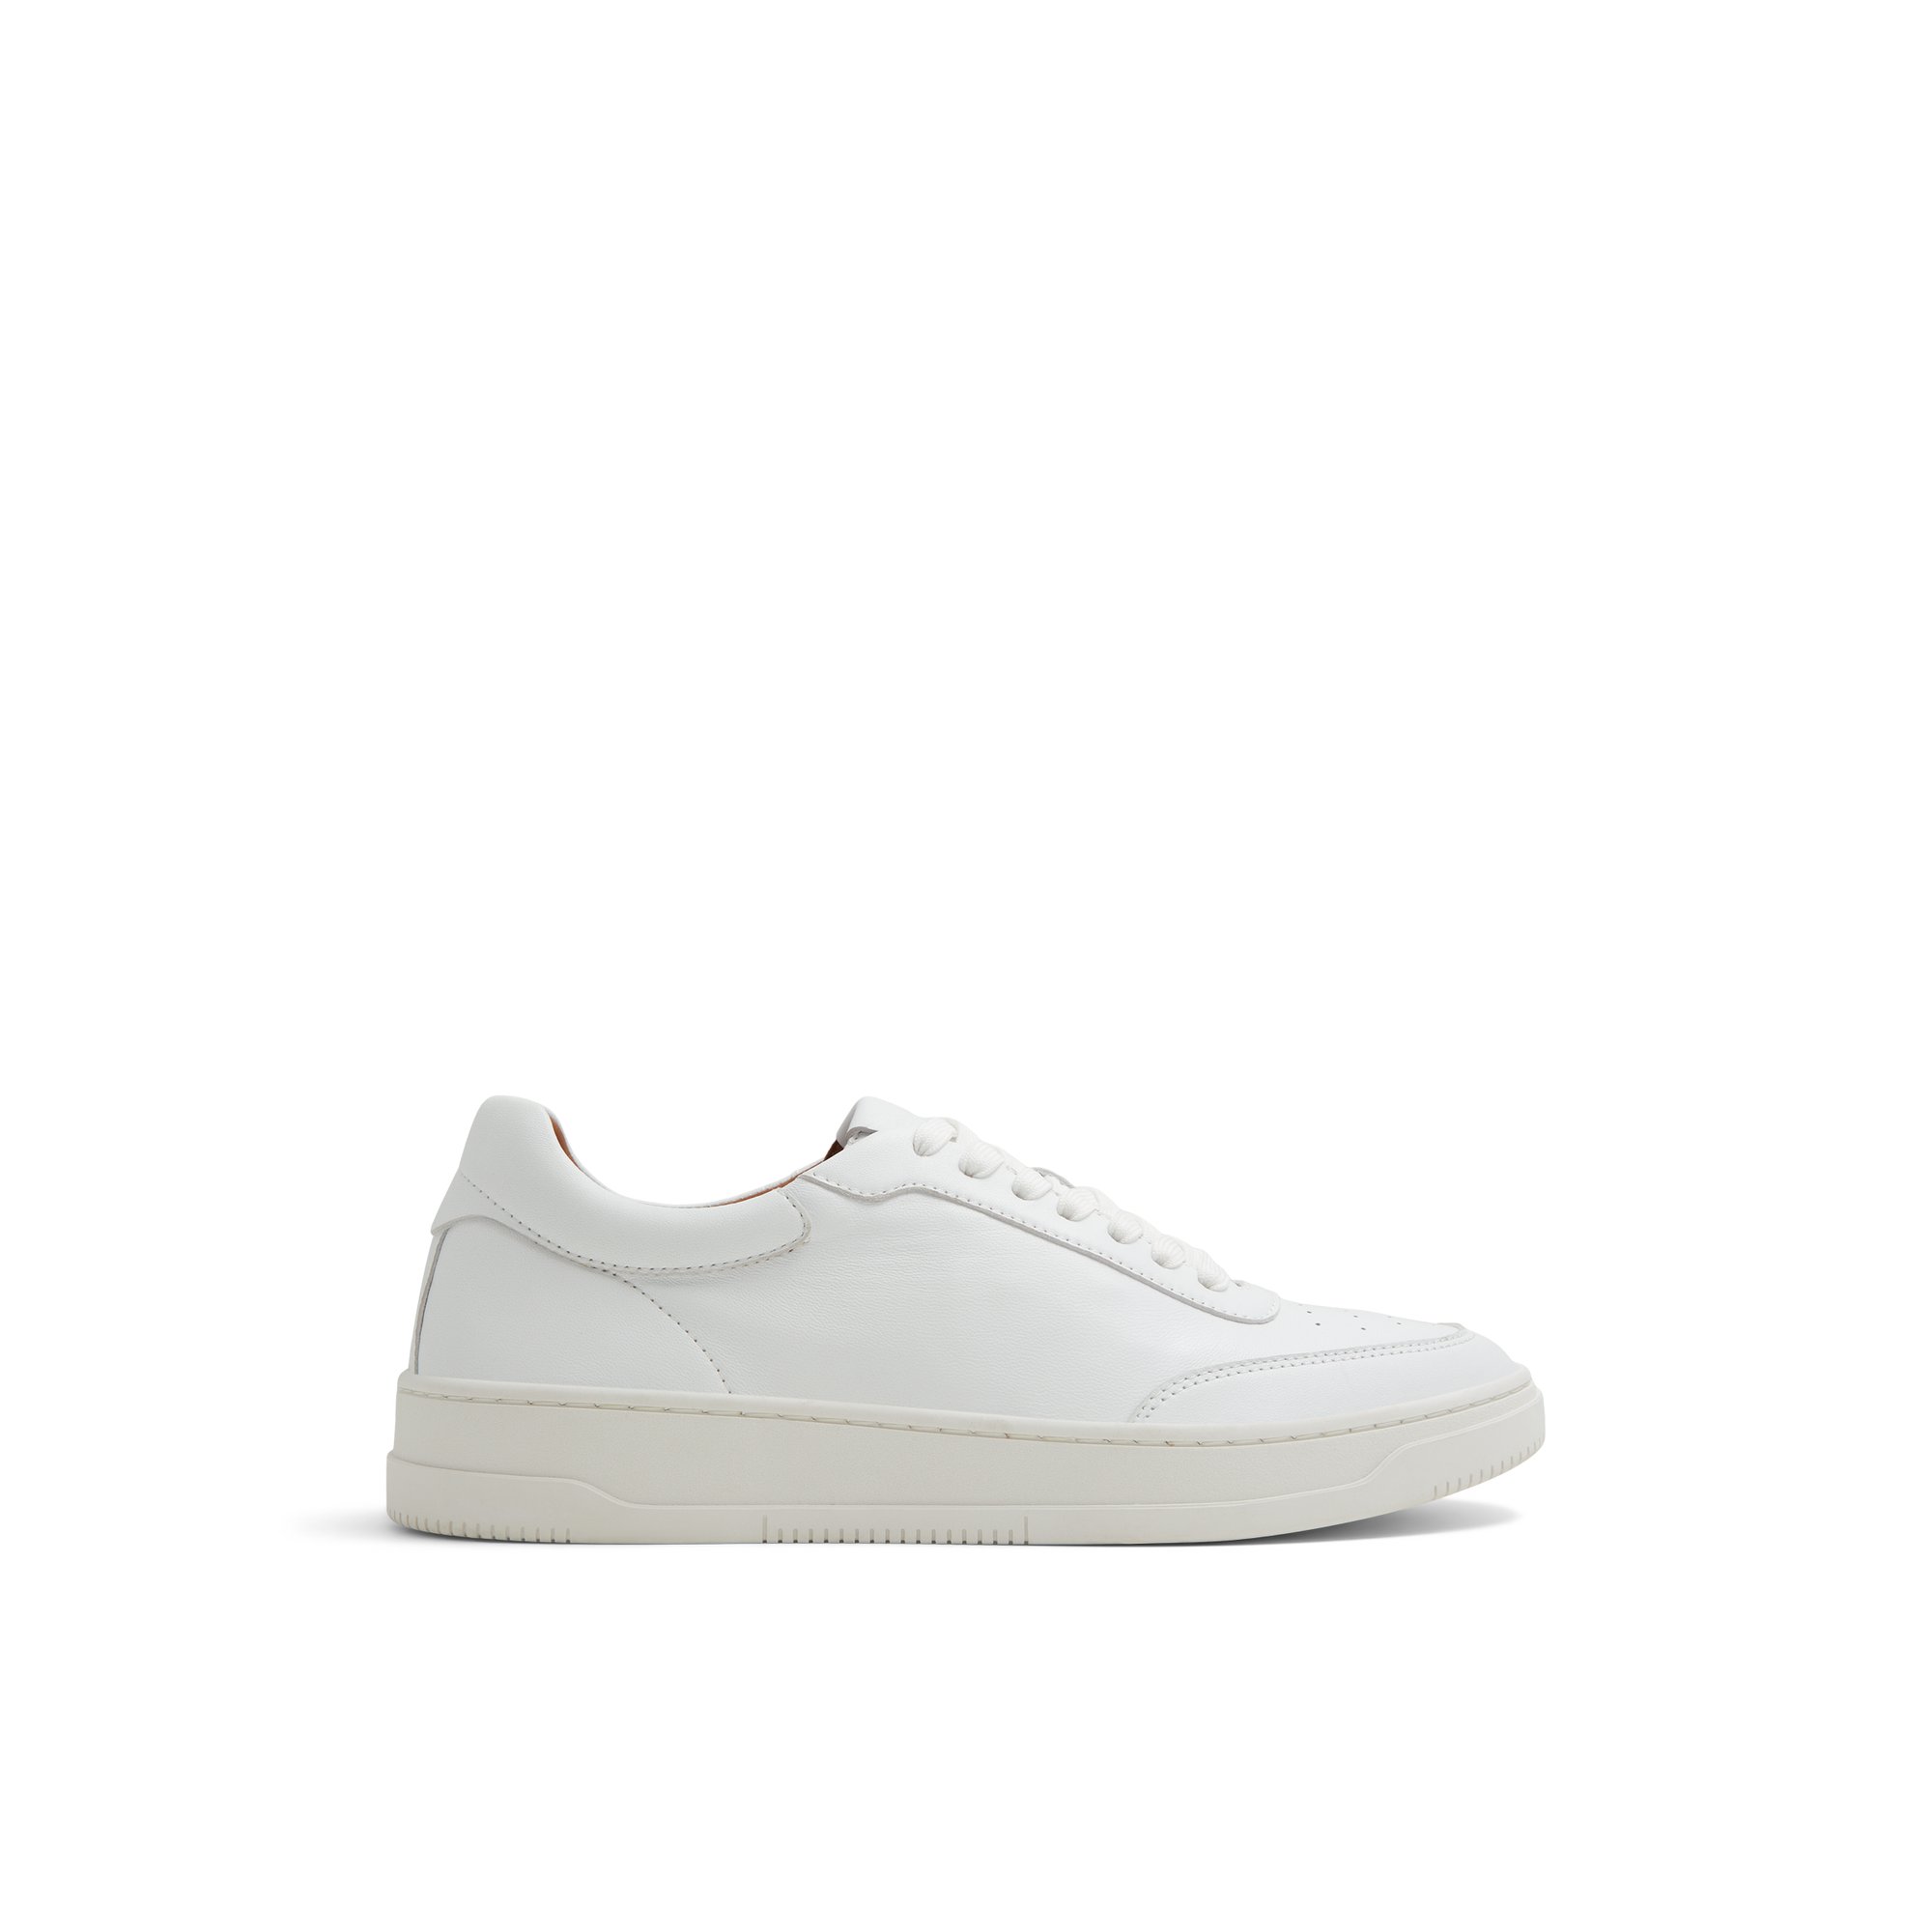 ALDO Baseliner - Men's Low Top Sneakers - White